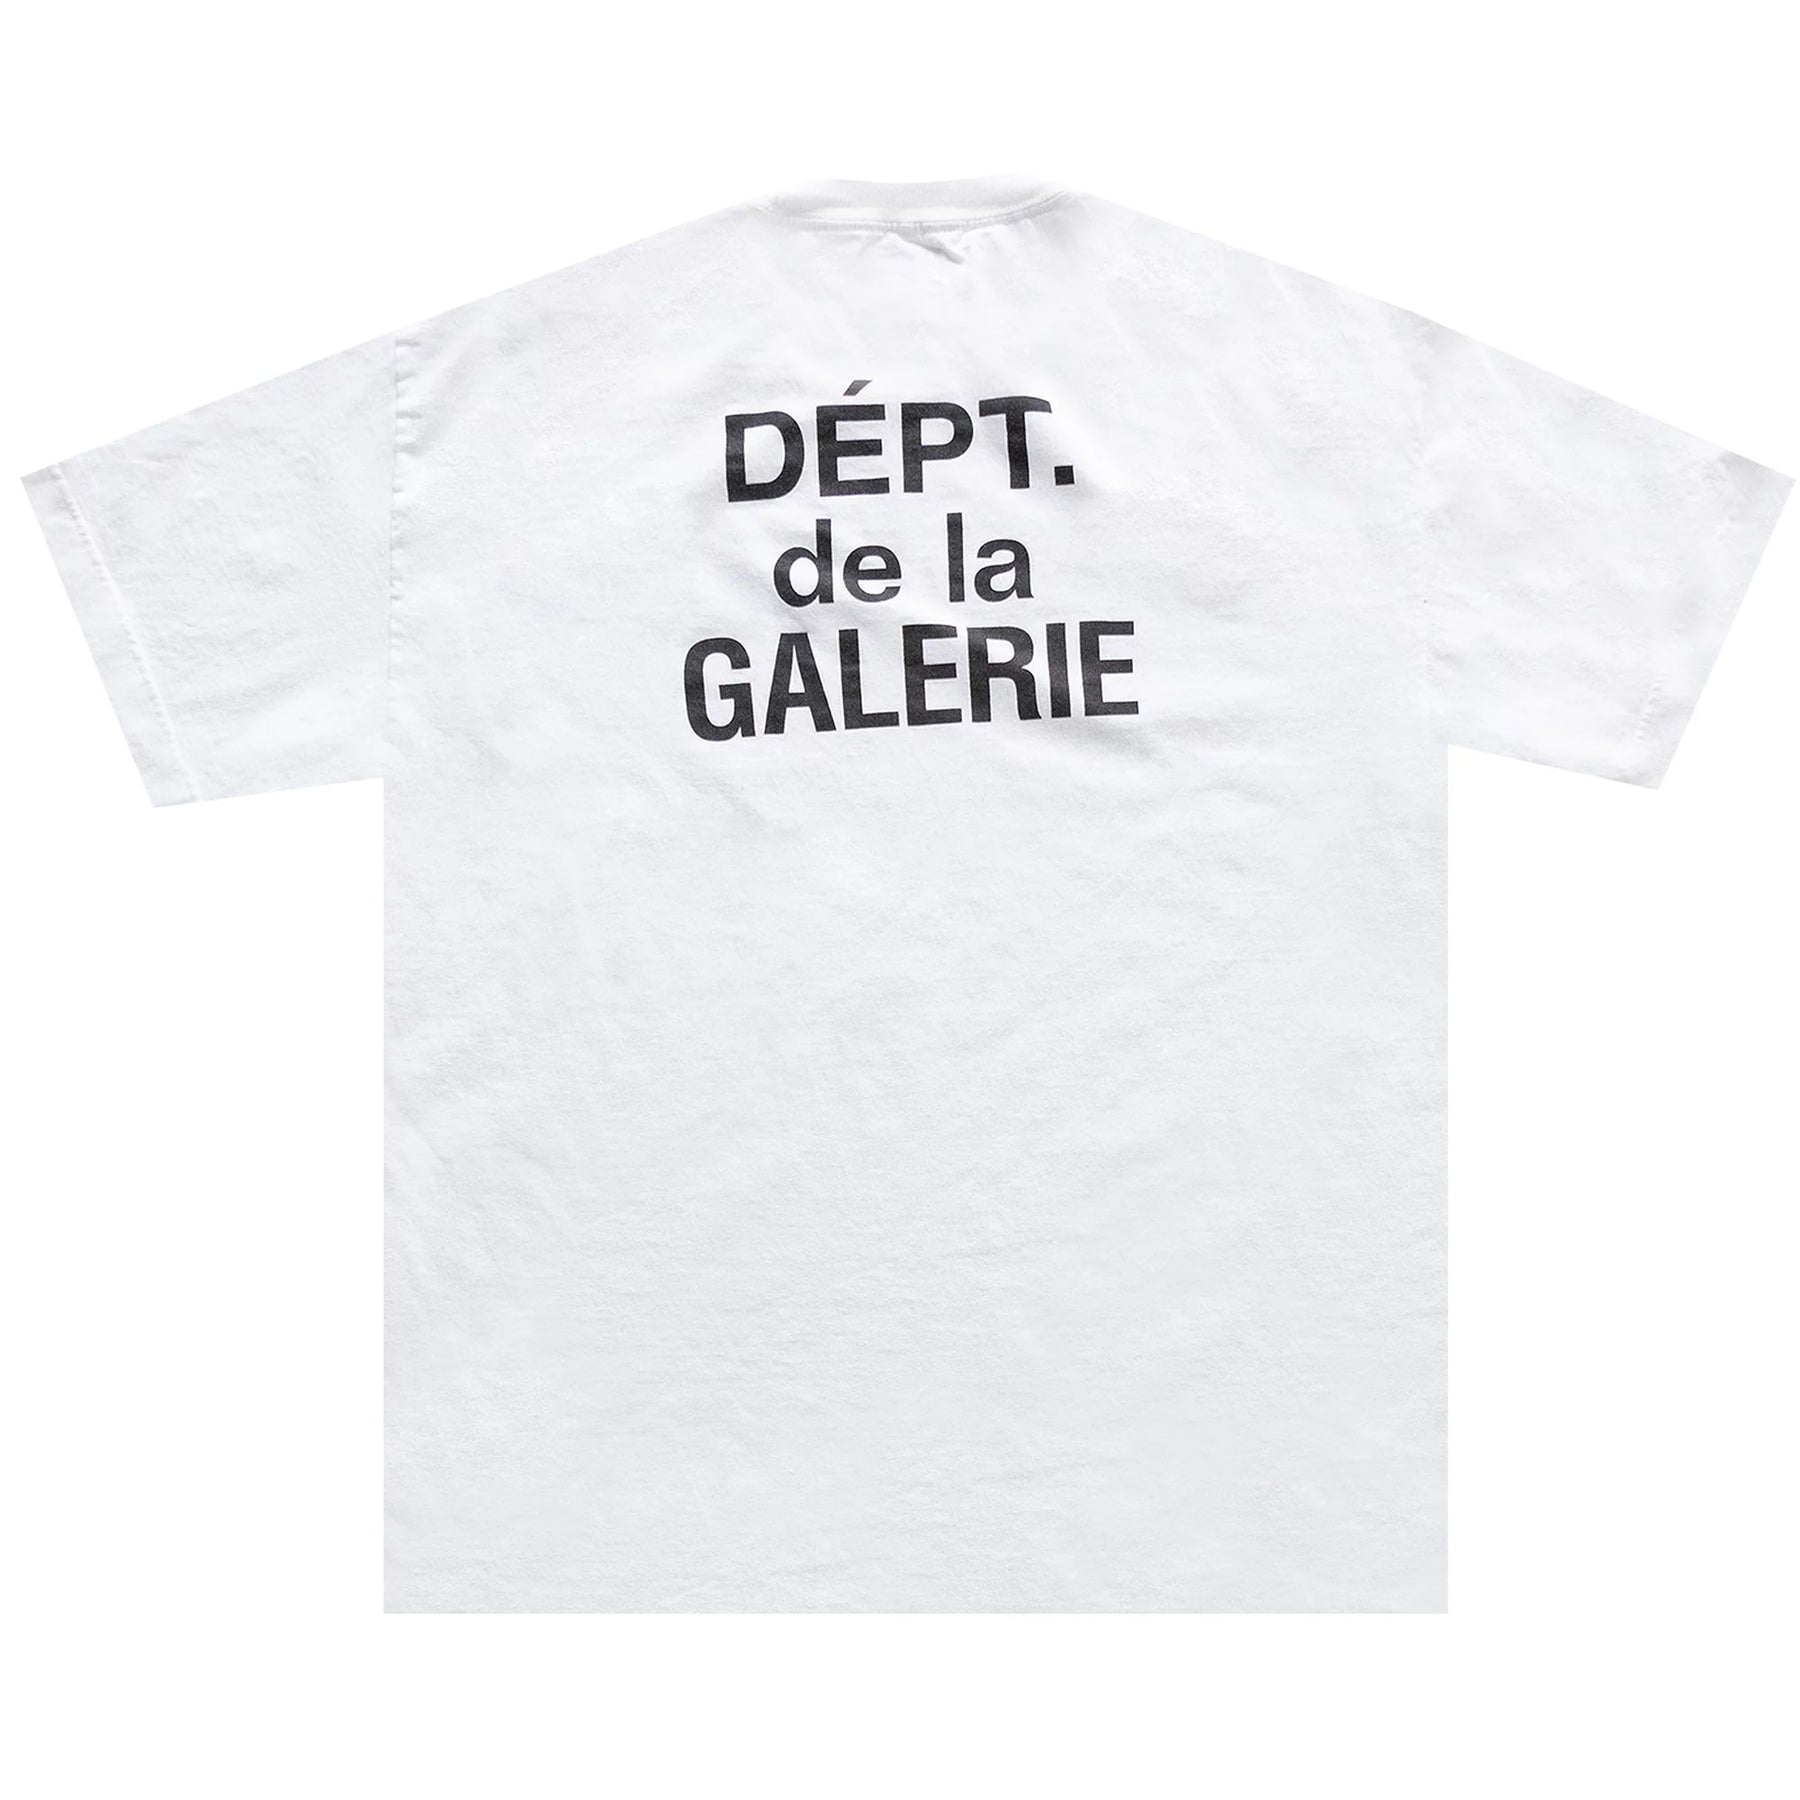 Gallery Dept. French Souvenir T-Shirt White